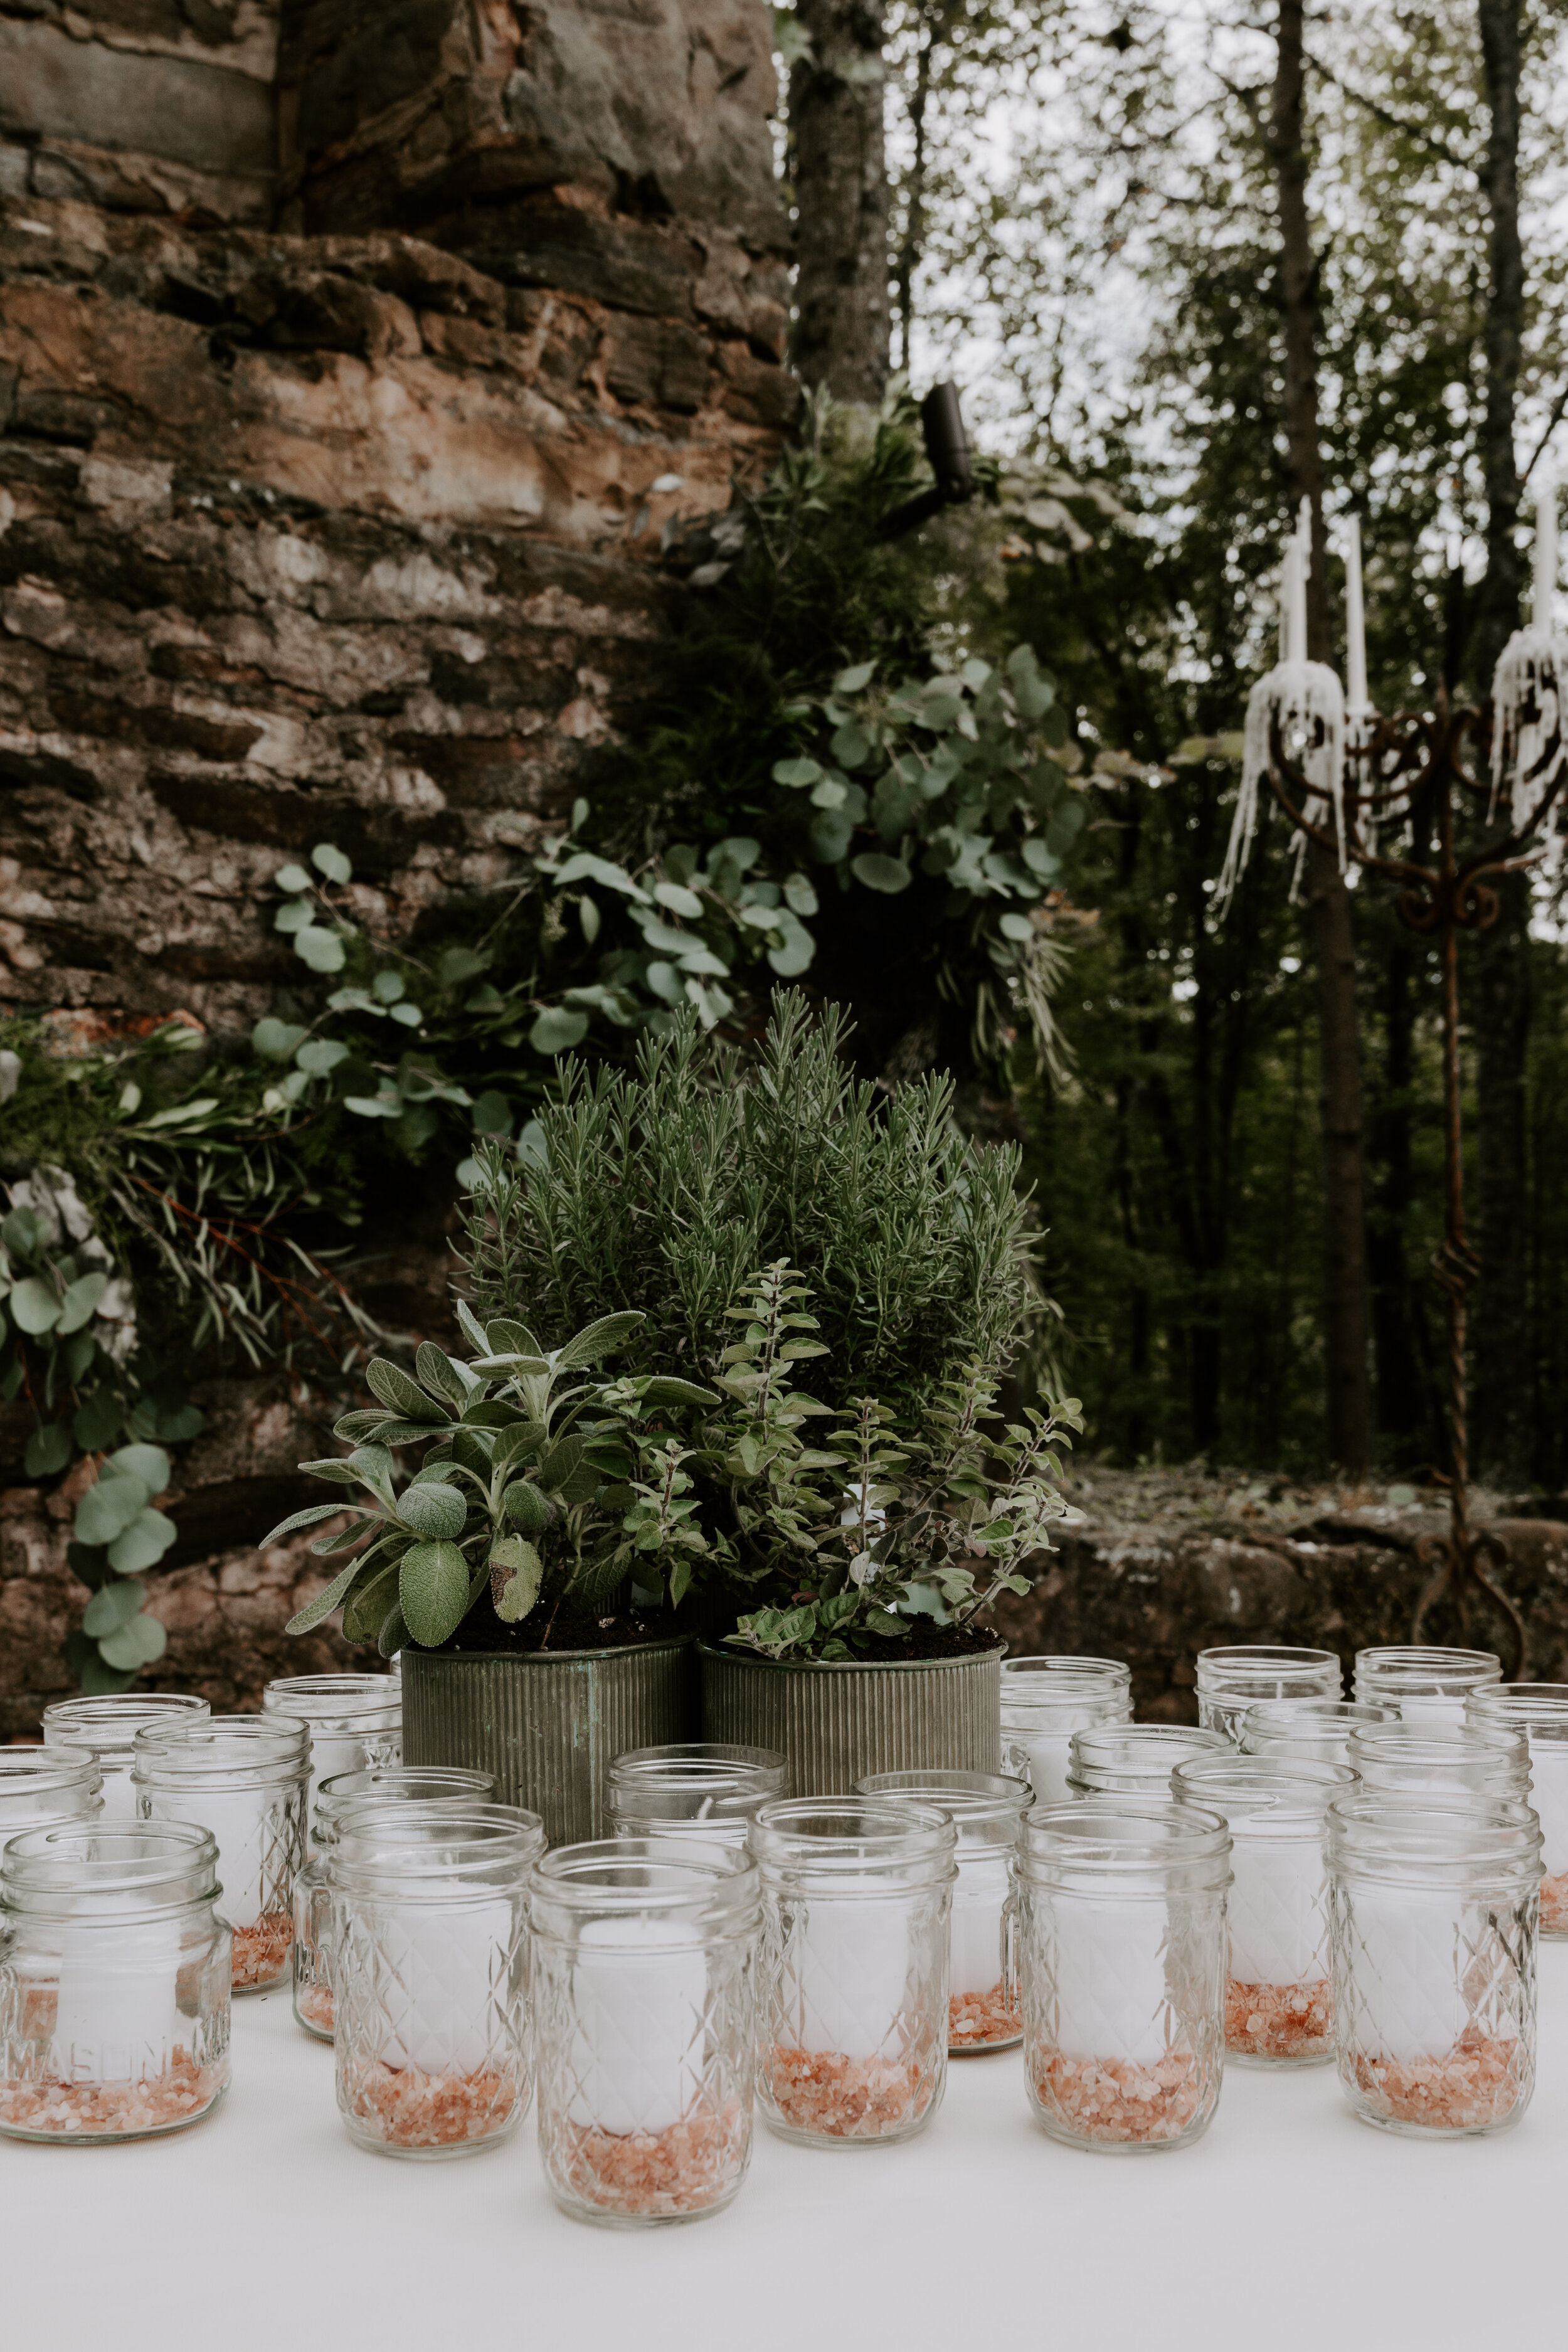 North GA wedding reception herbs and essential oils as centerpiece